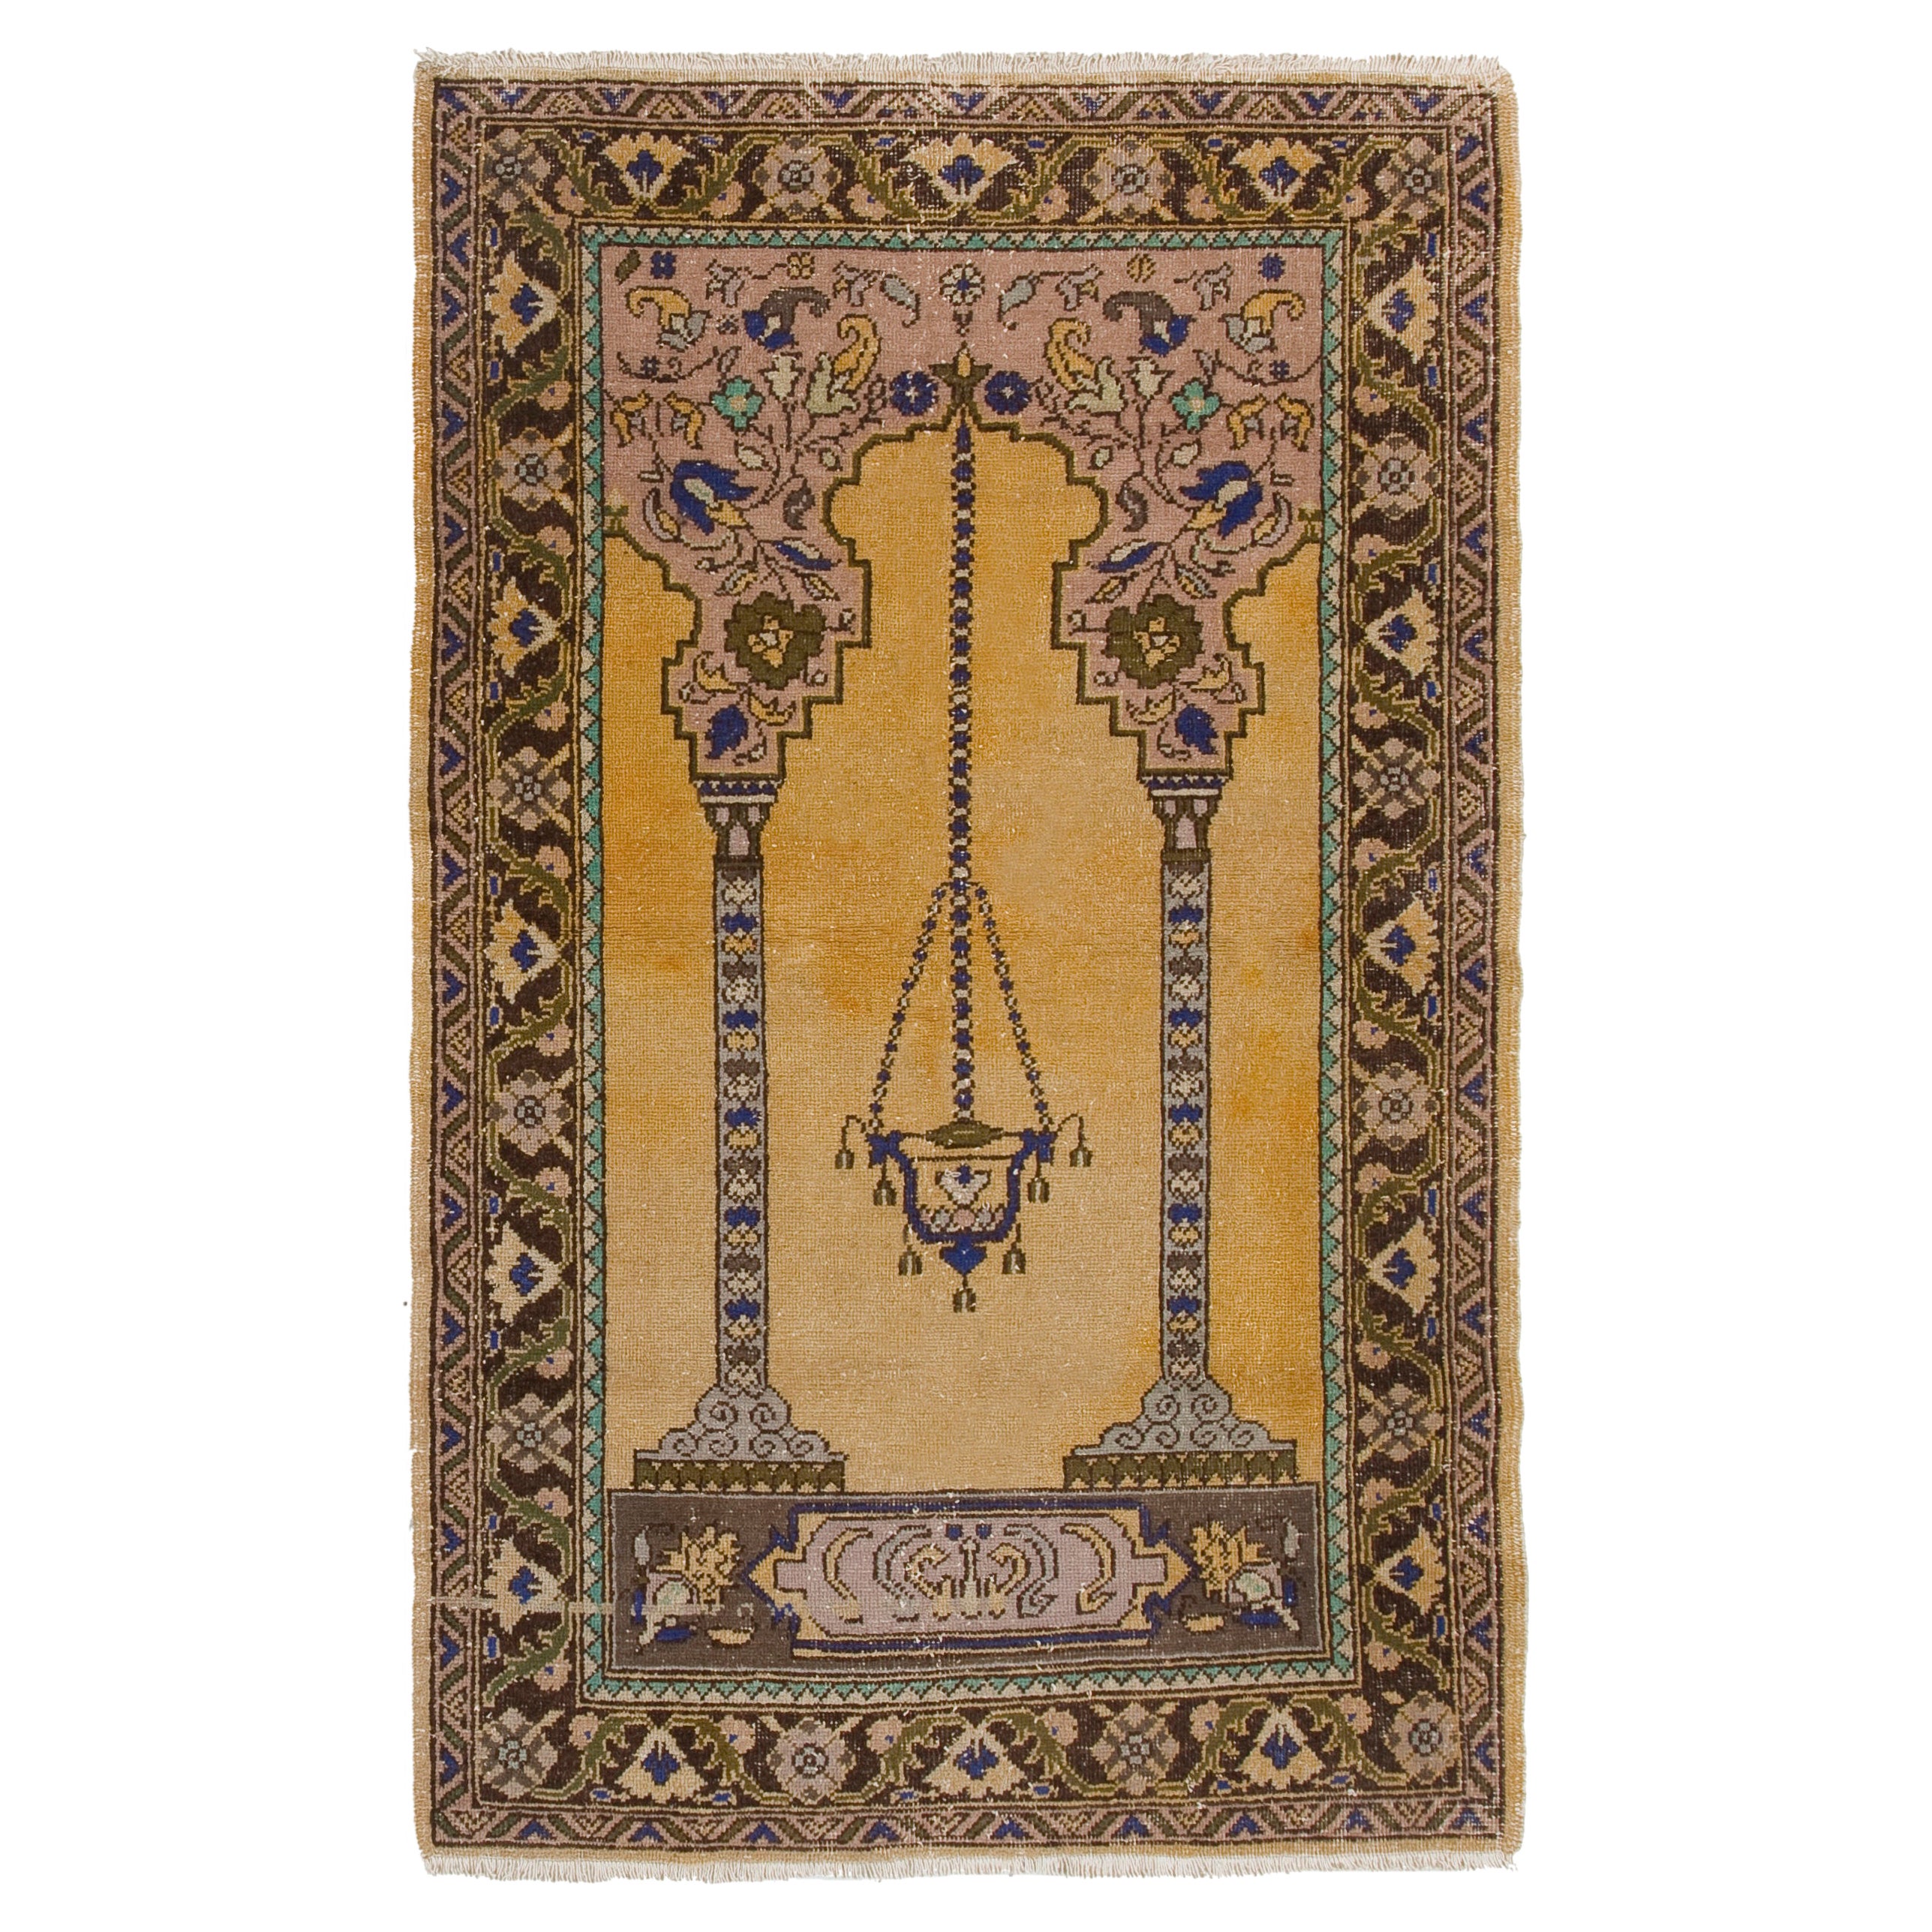 3.2x5.3 Ft Vintage Prayer Rug Depicting a Chandelier, Couple of Columns, Flowers